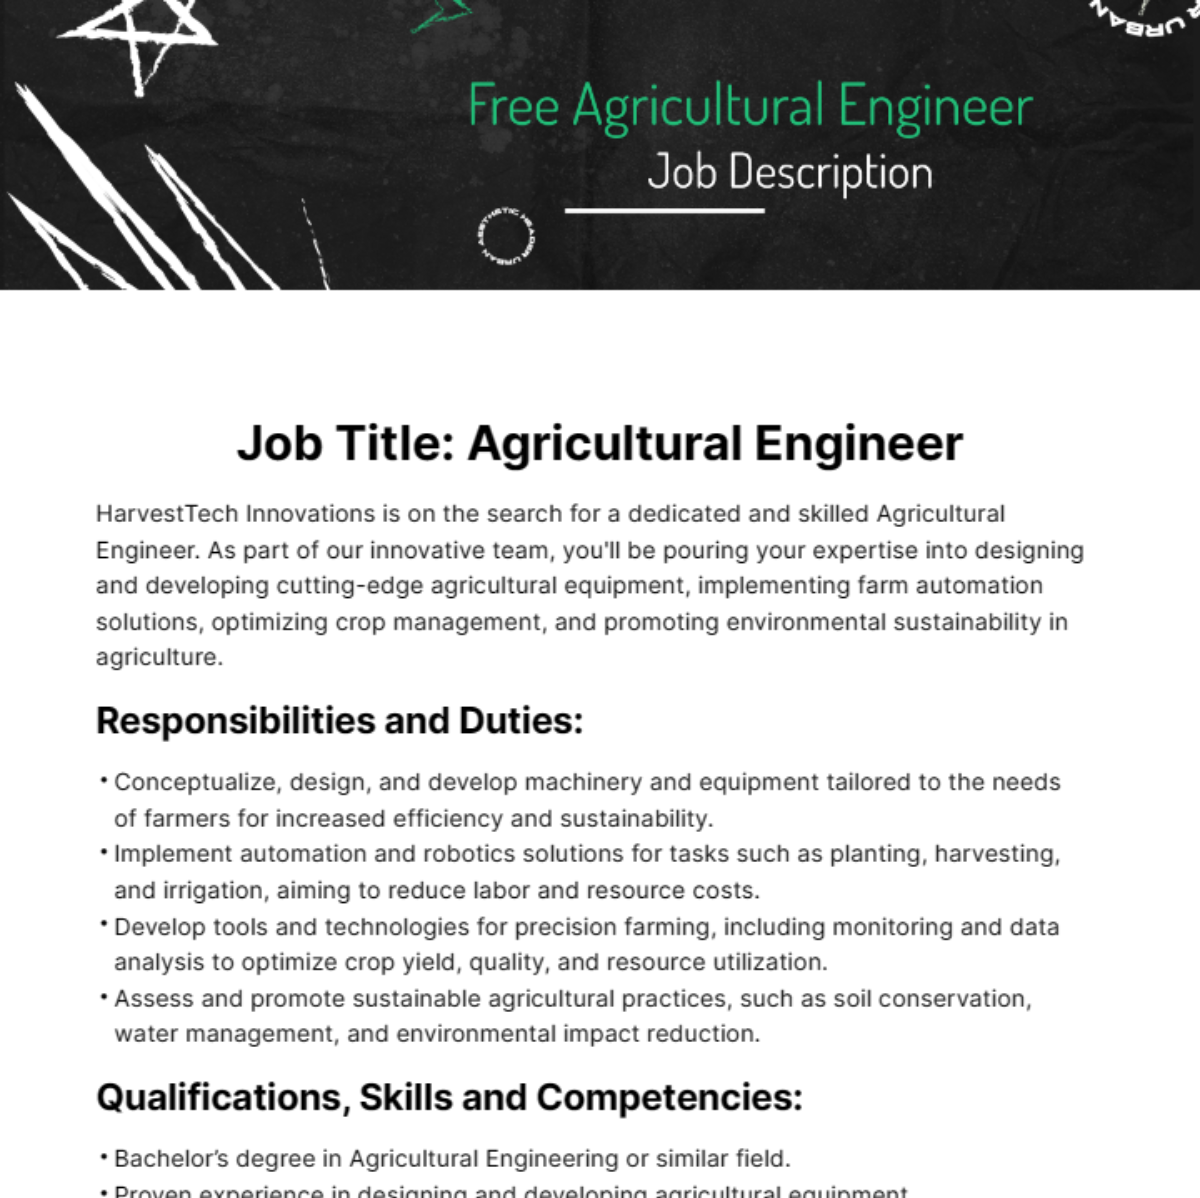 Free Agricultural Engineer Job Description Template